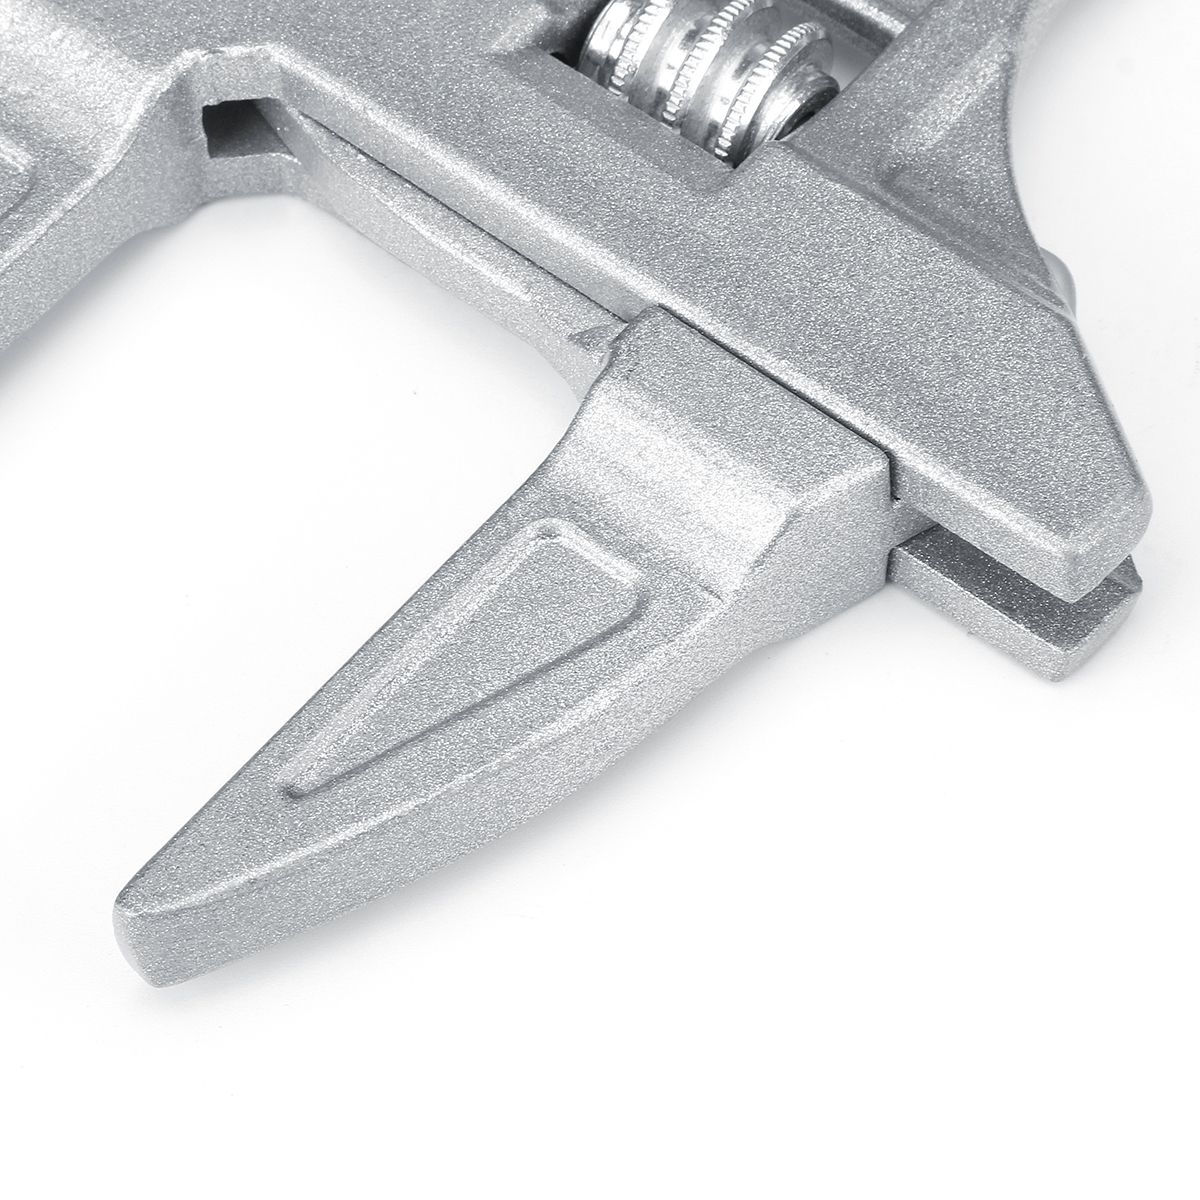 6-68mm-Adjustable-Spanner-Wrench-Large-Openings-Short-Handle-Repair-Hand-Tool-1474721